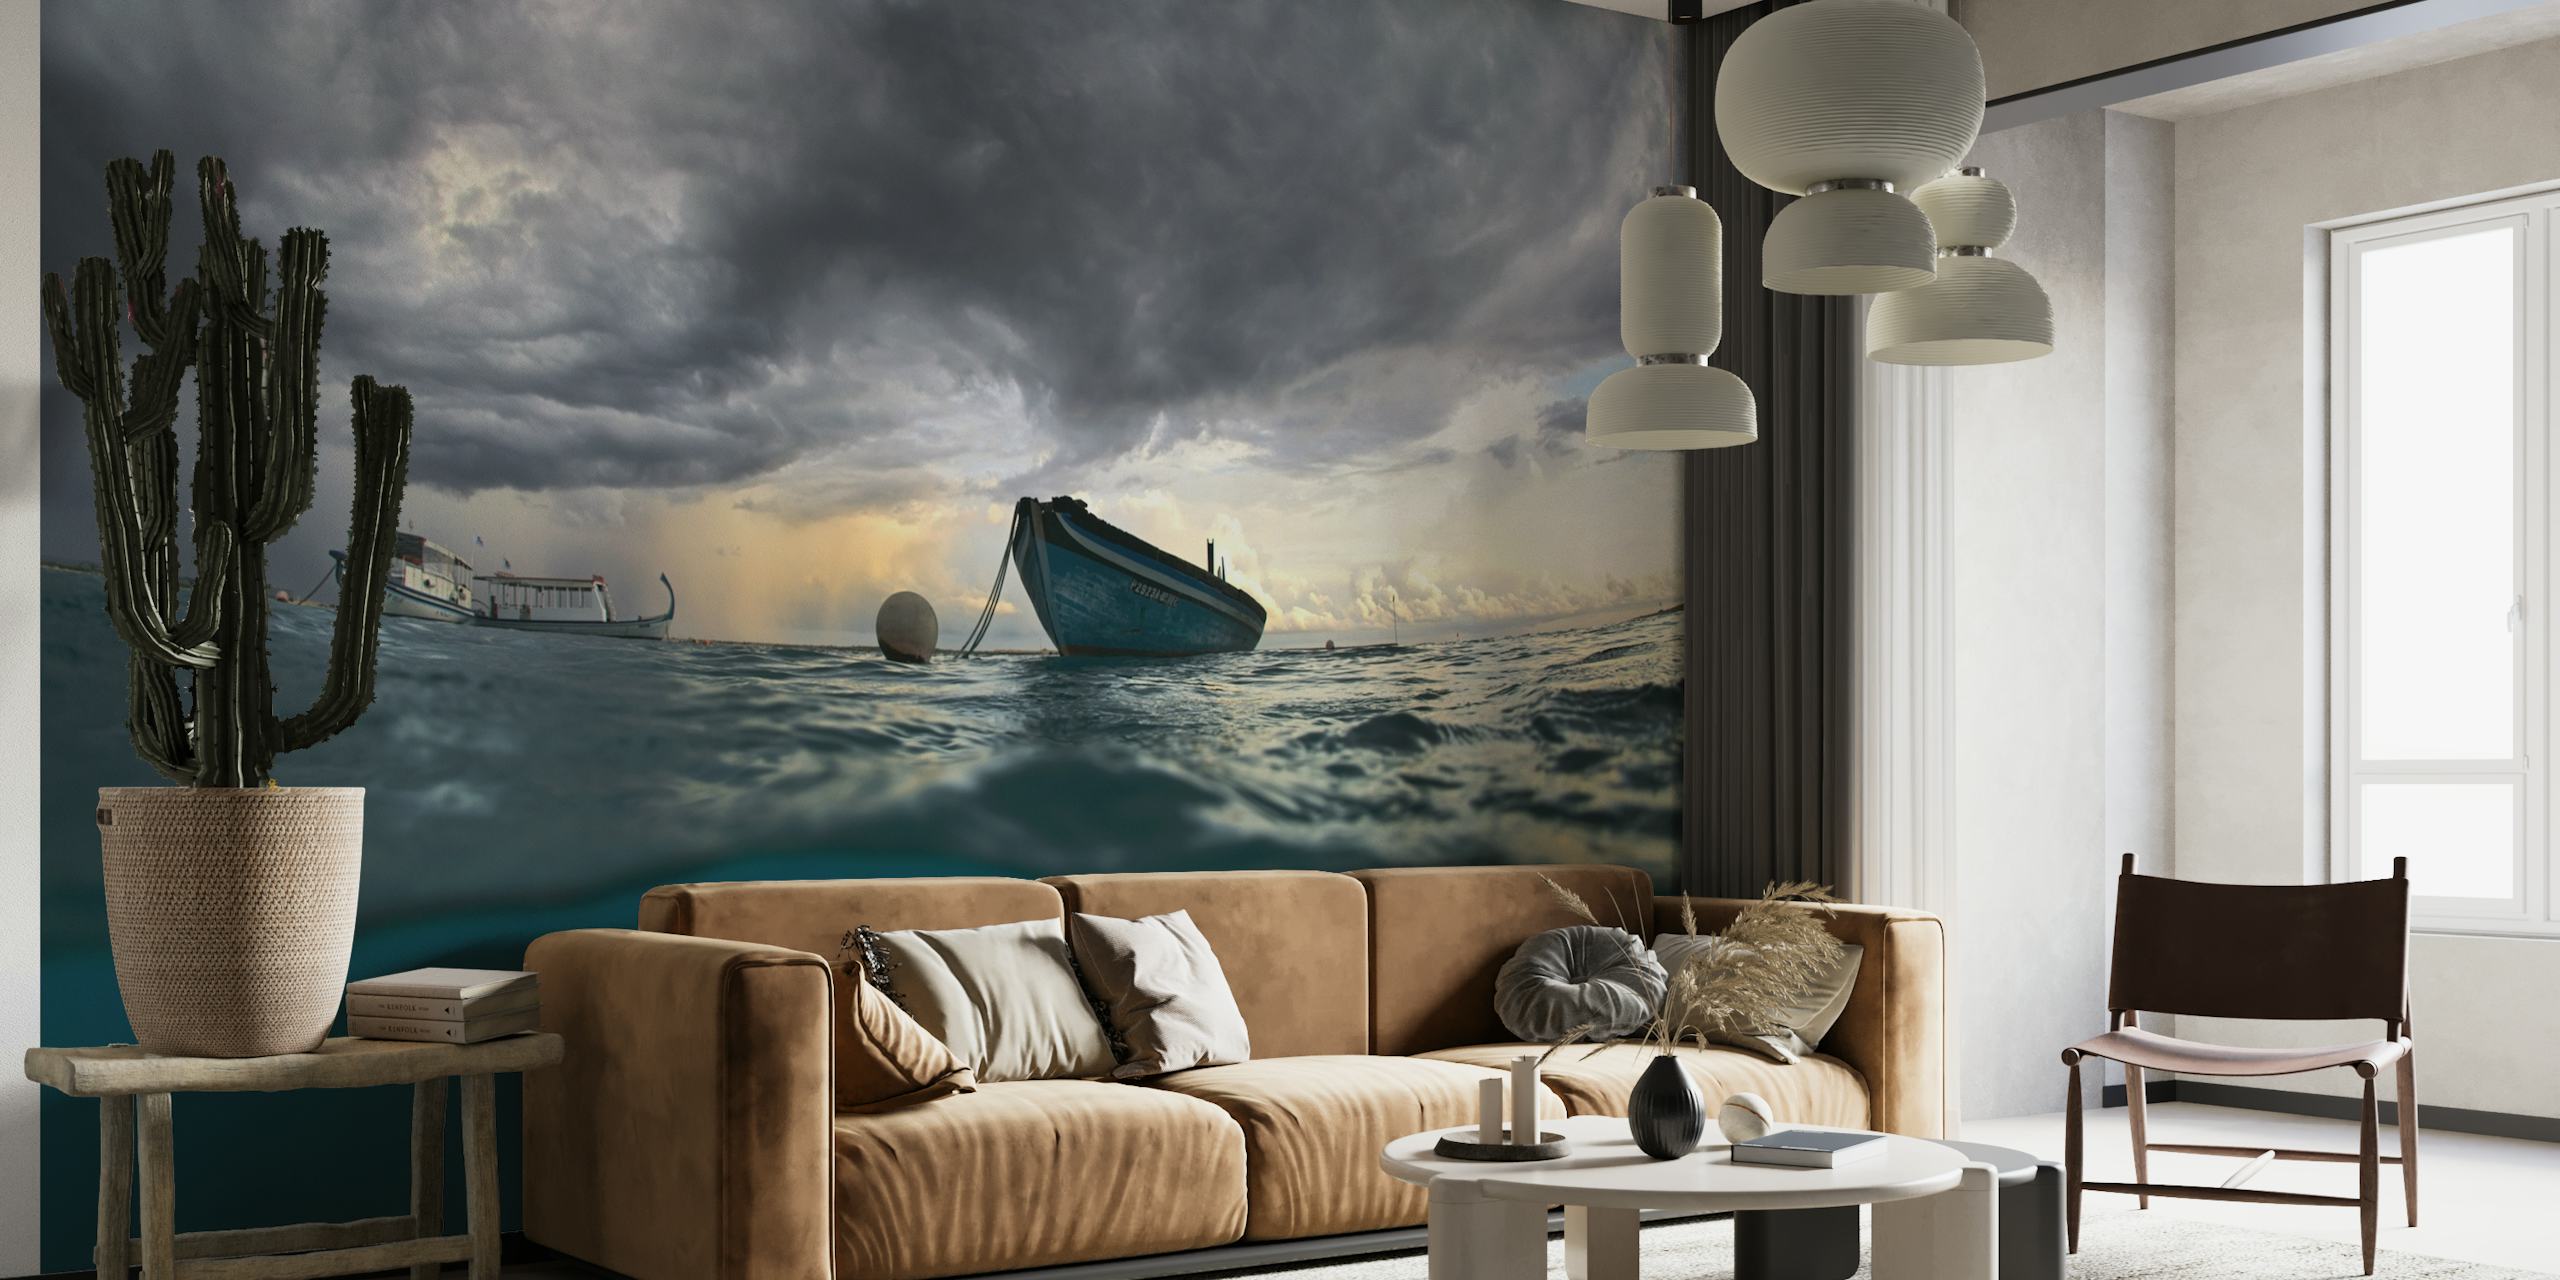 The boat wallpaper